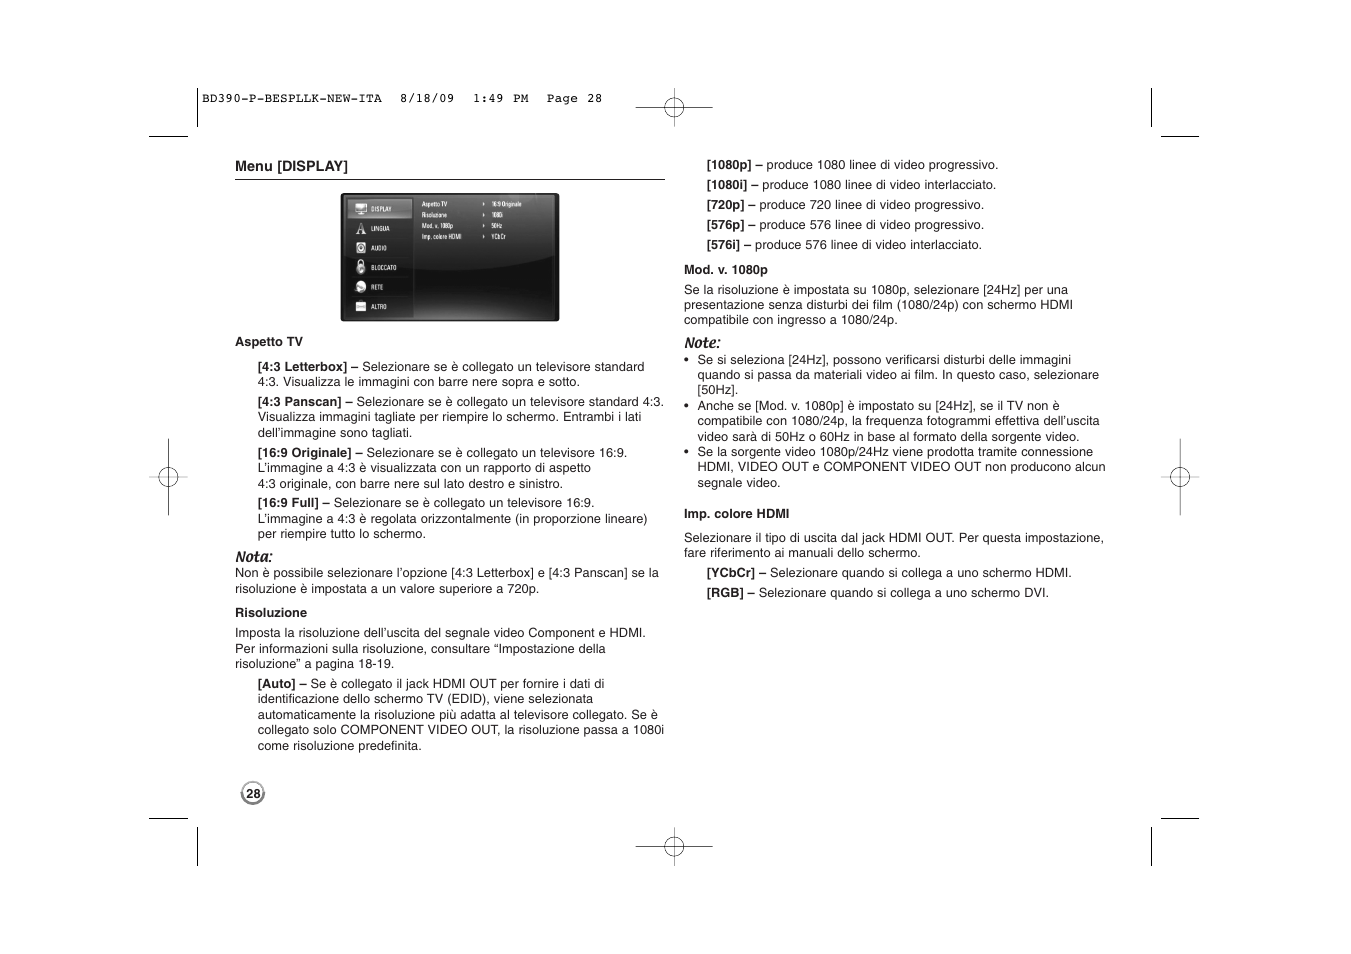 LG BD390 Manuale d'uso | Pagina 28 / 60